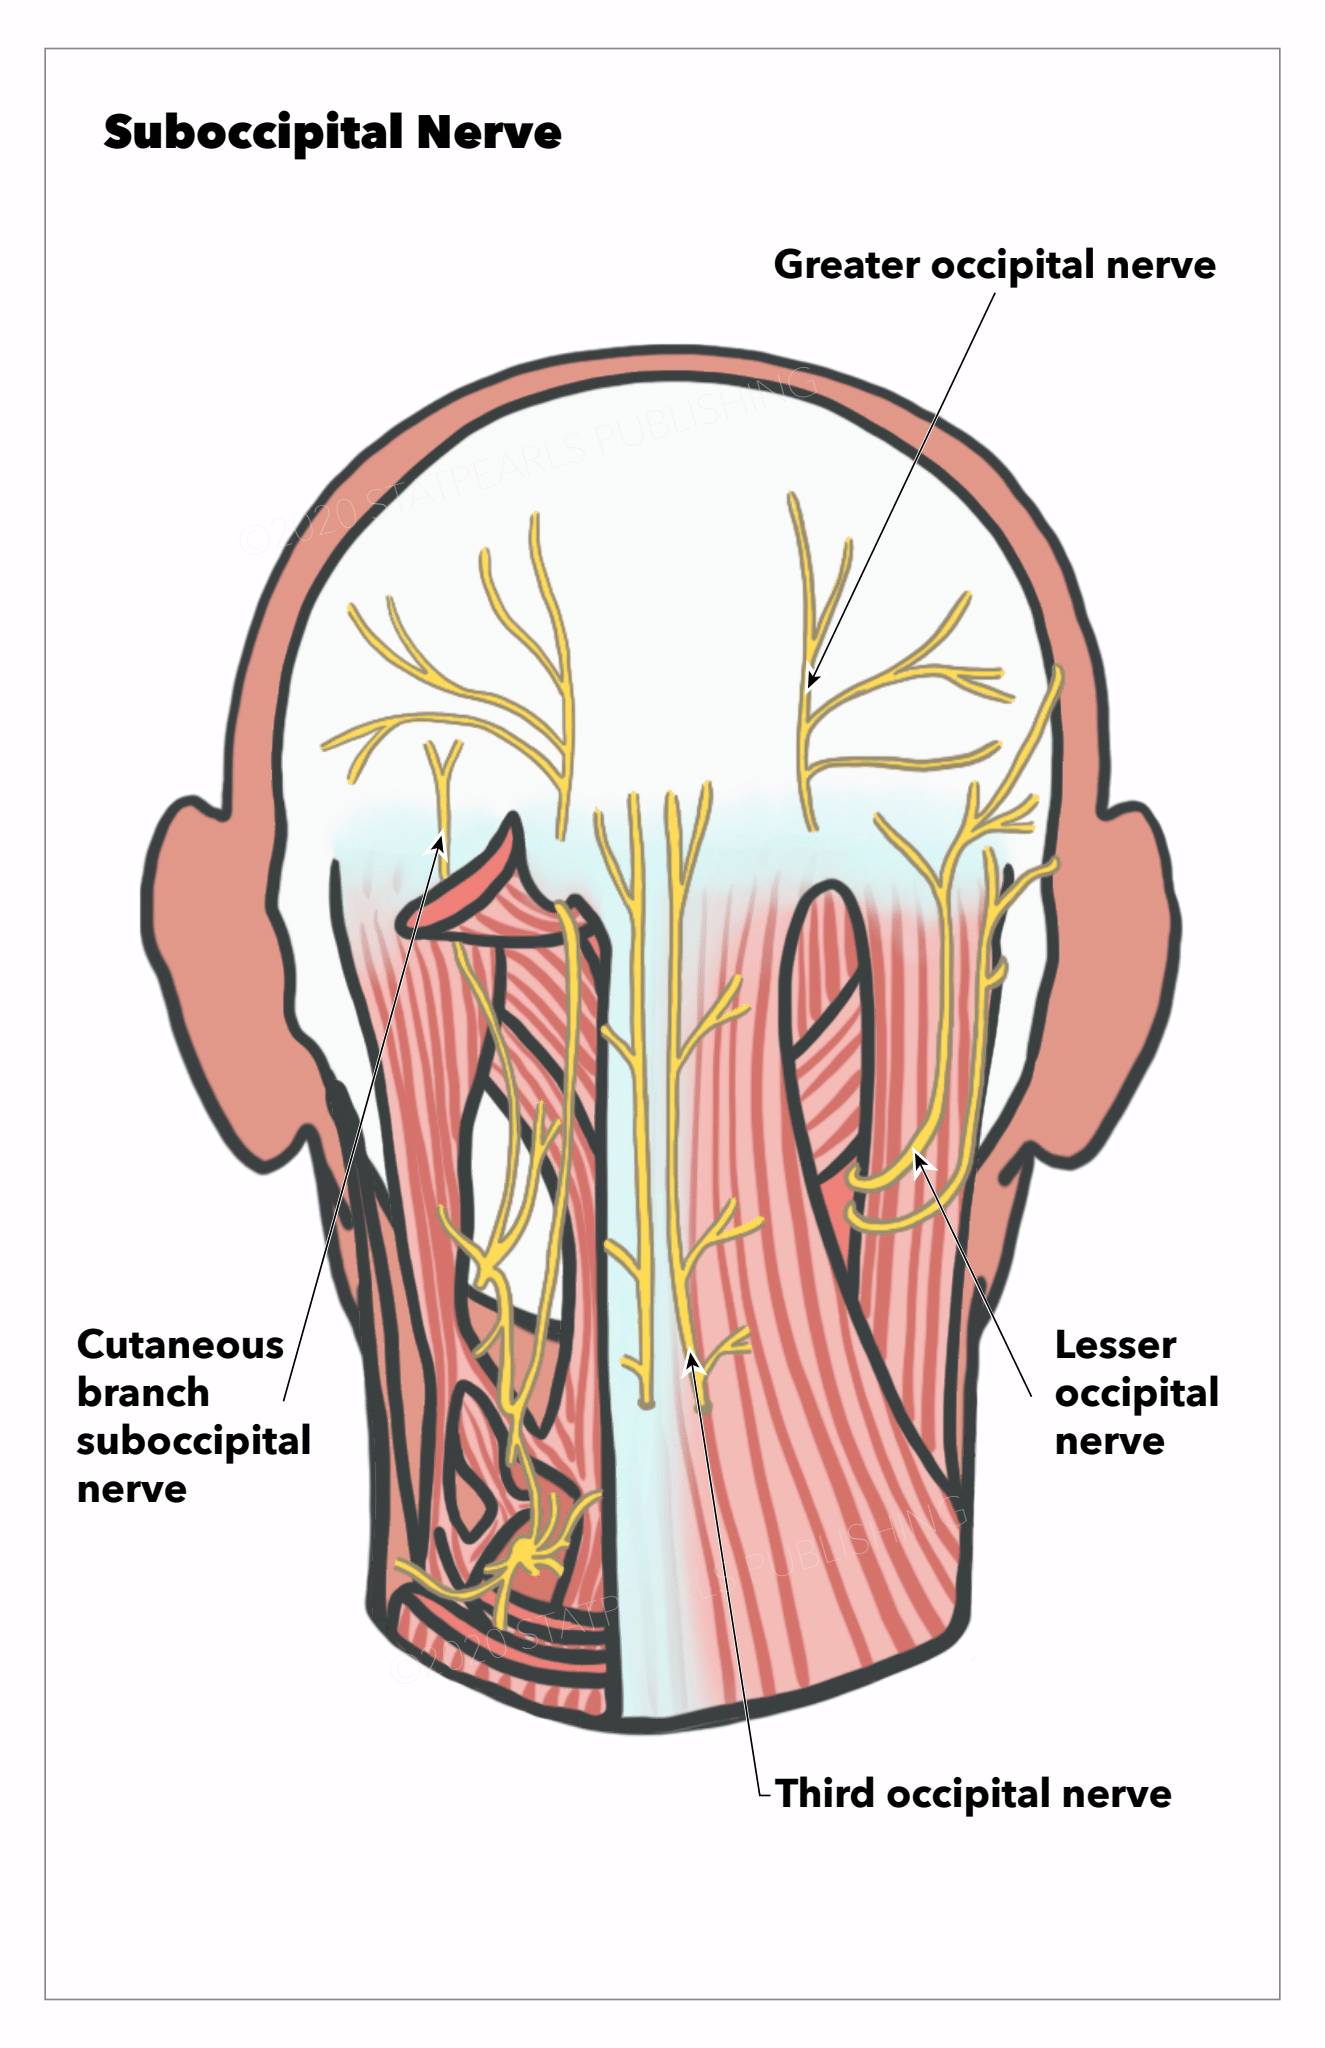 Suboccipital Nerve, Greater occipital nerve, Cutaneous branch suboccipital nerve, Lesser occipital nerve, Third occipital ner